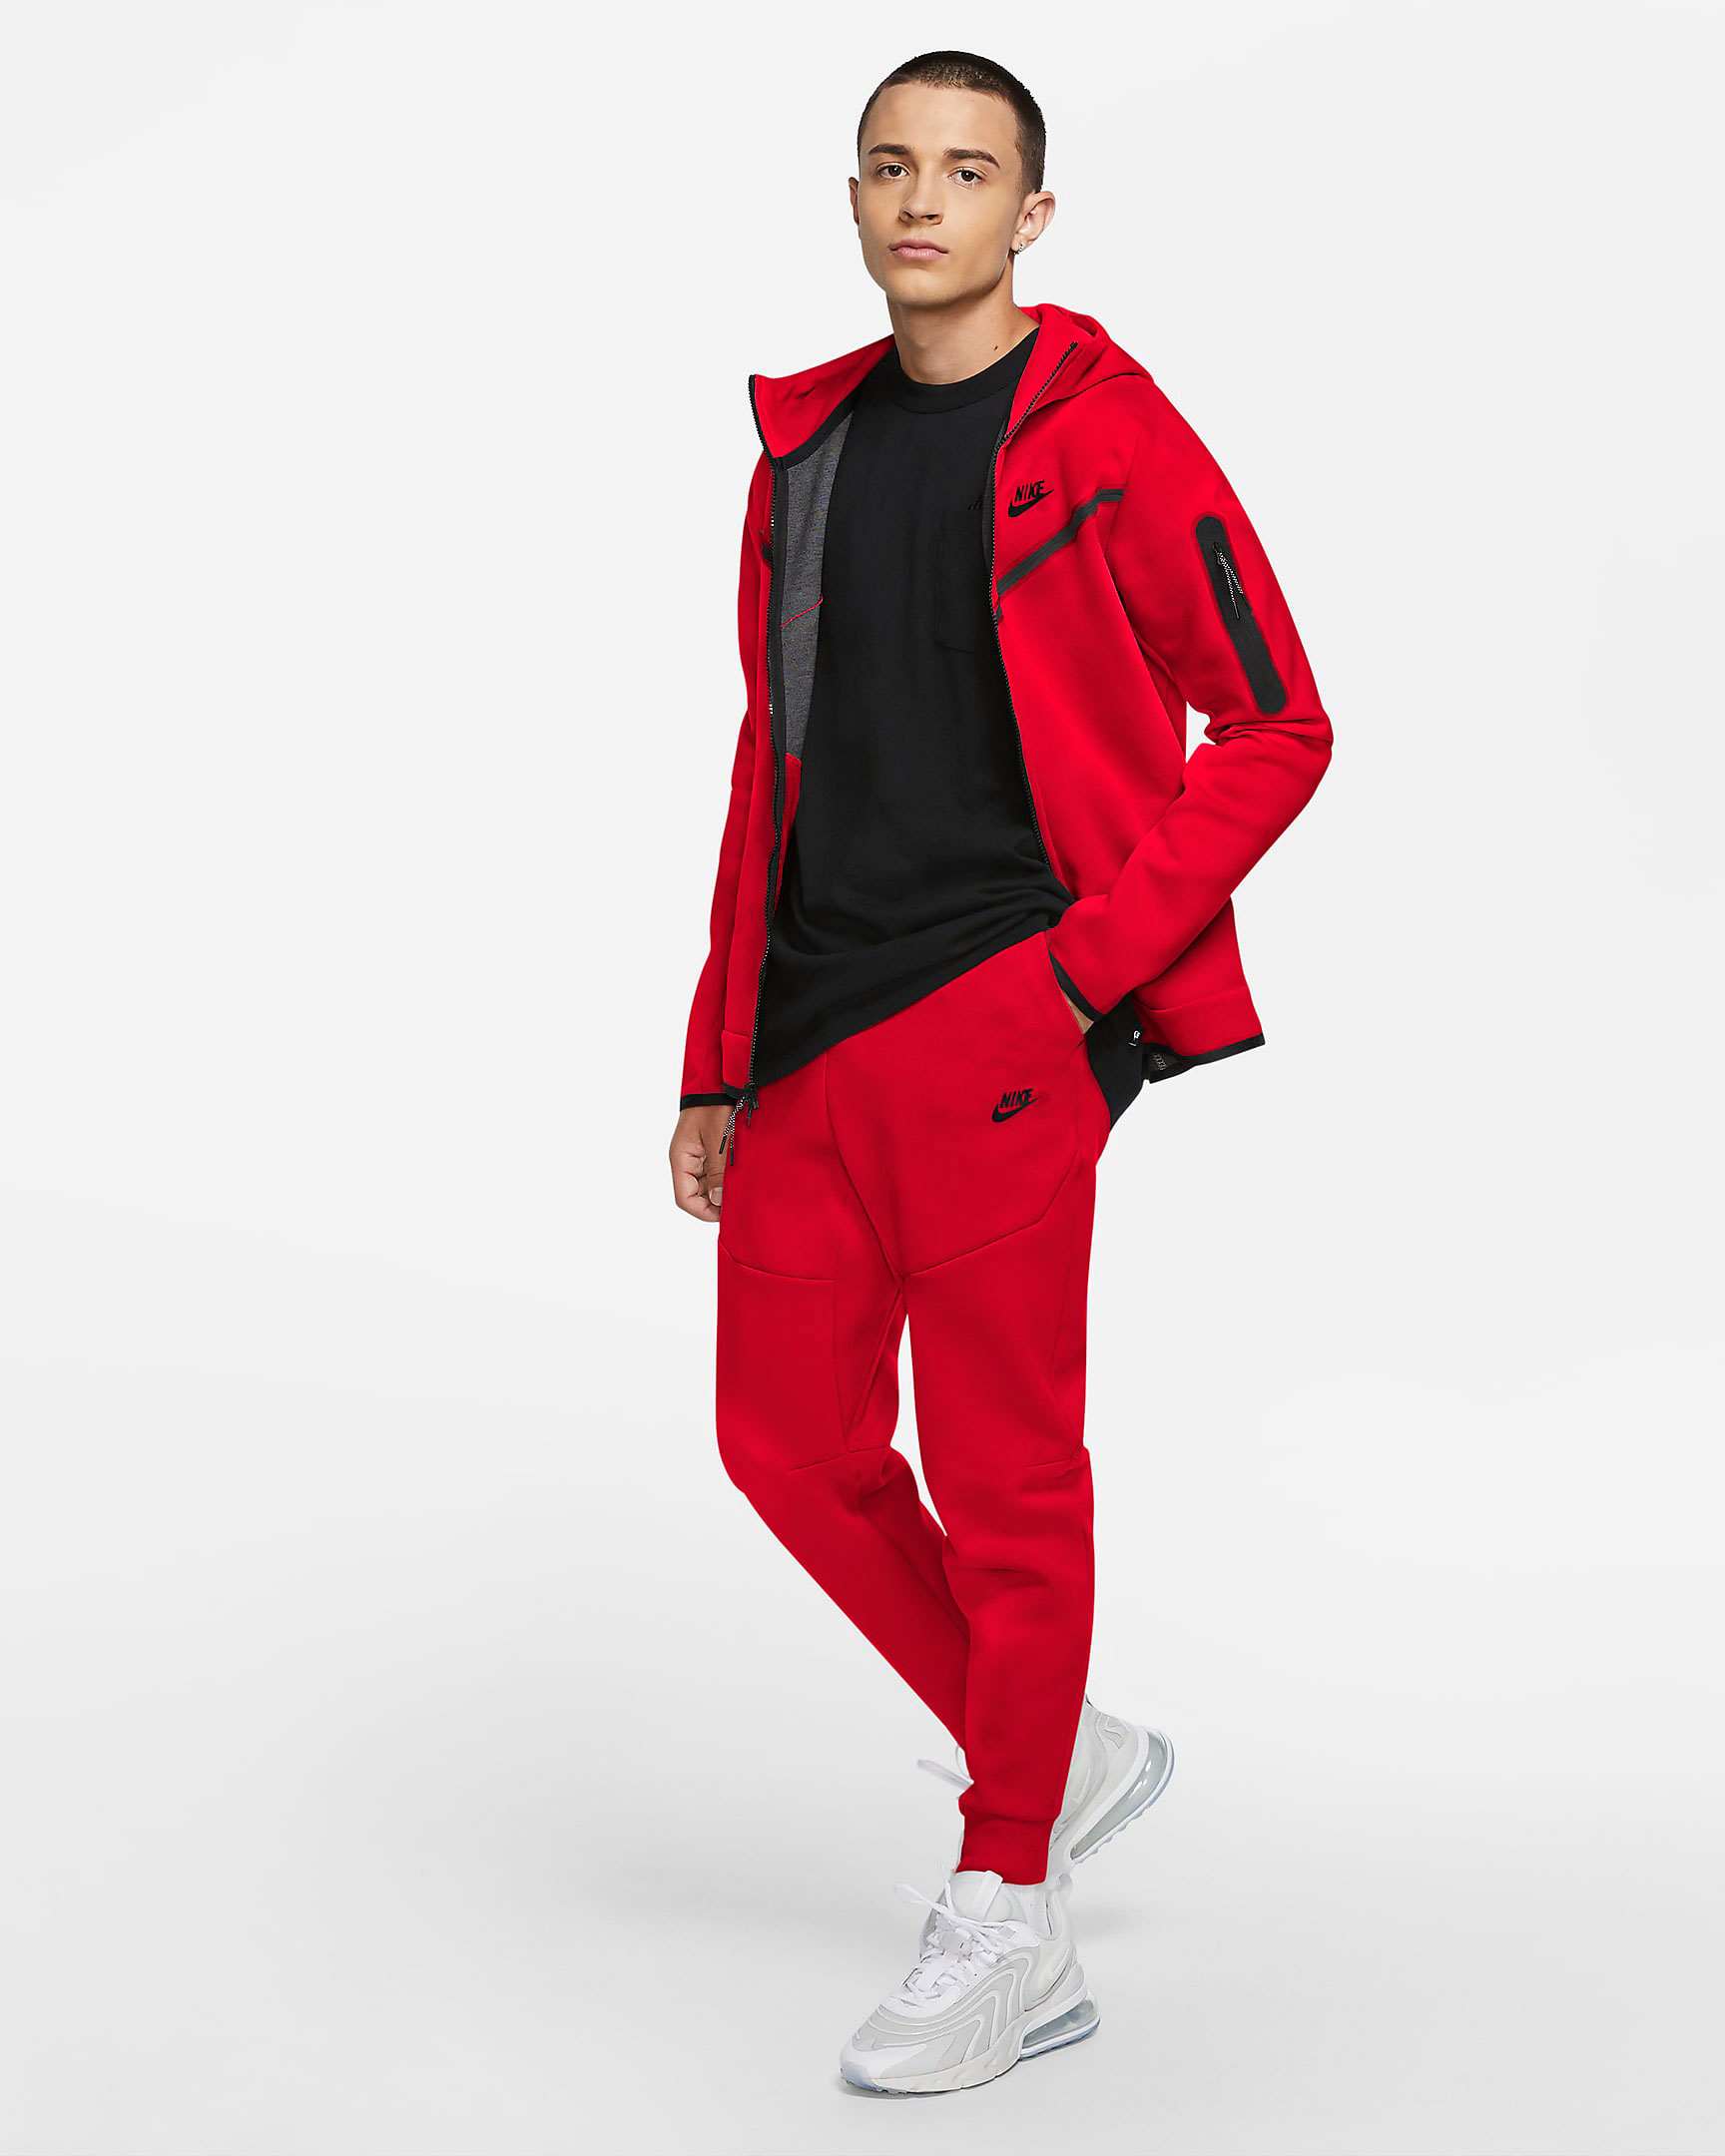 nike-tech-fleece-red-hoodie-jogger-pants